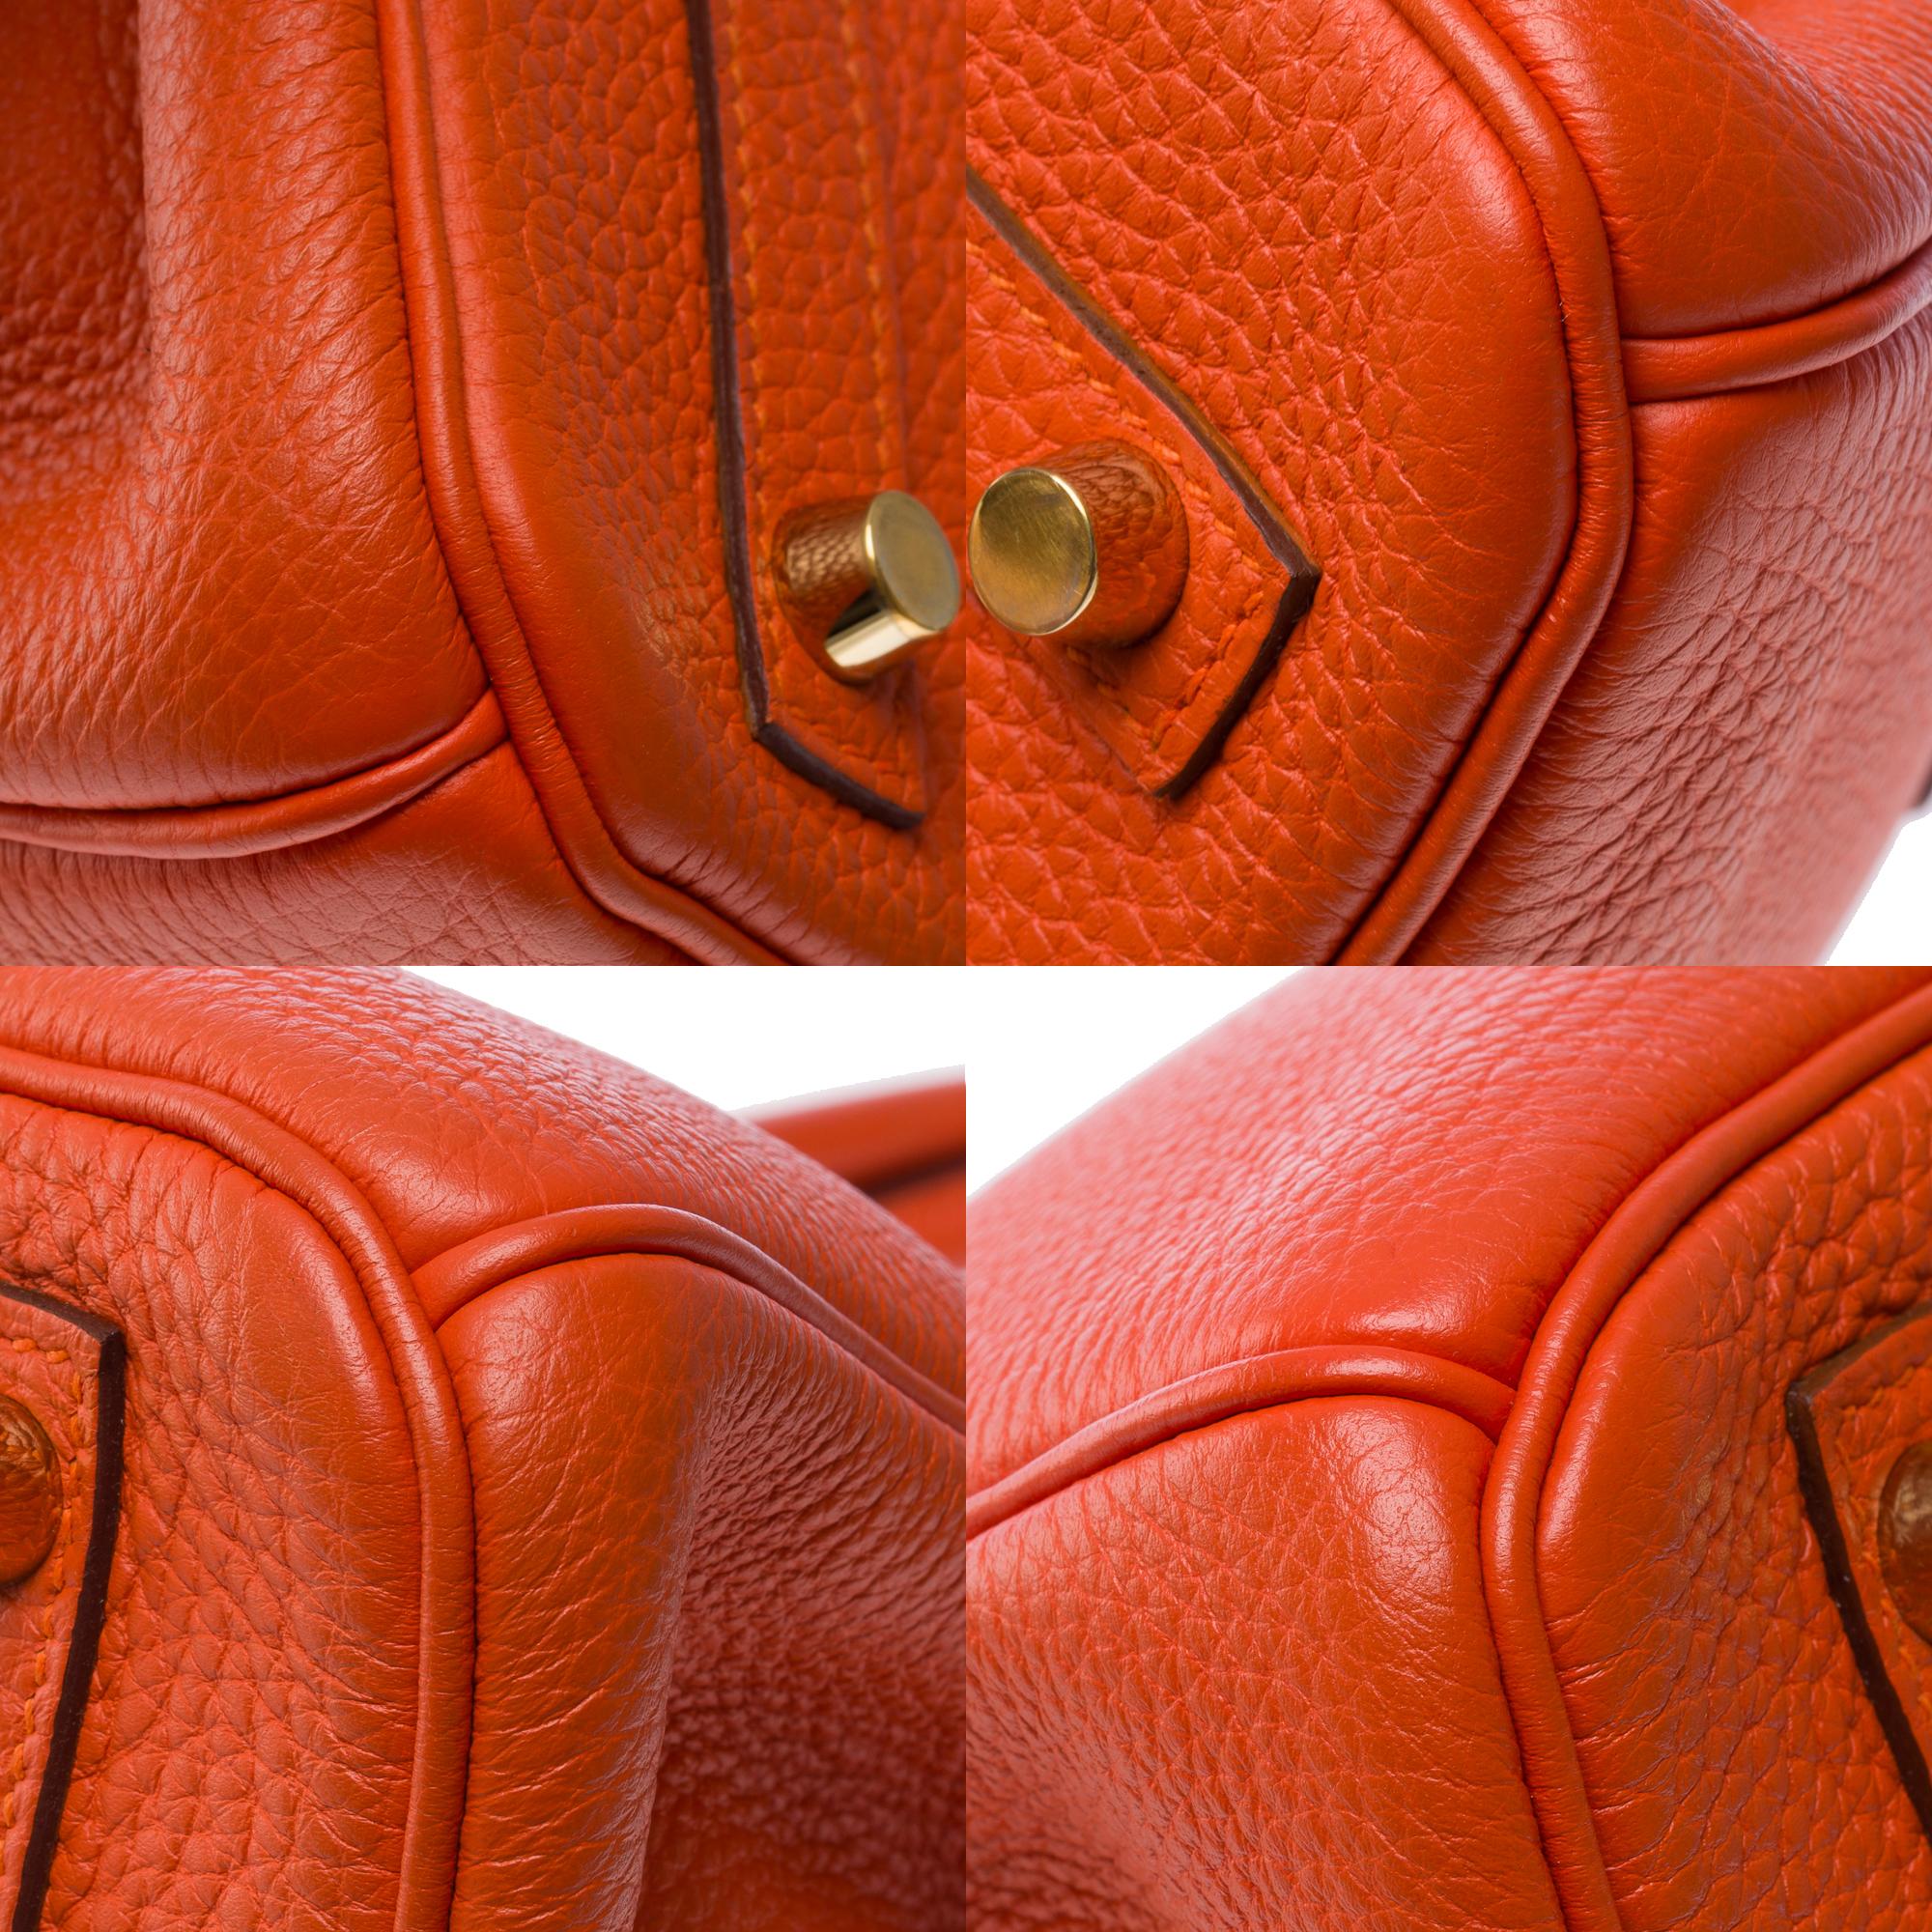 Superb Hermes Birkin 30 handbag in Taurillon Clemence Orange Poppy leather, GHW For Sale 5